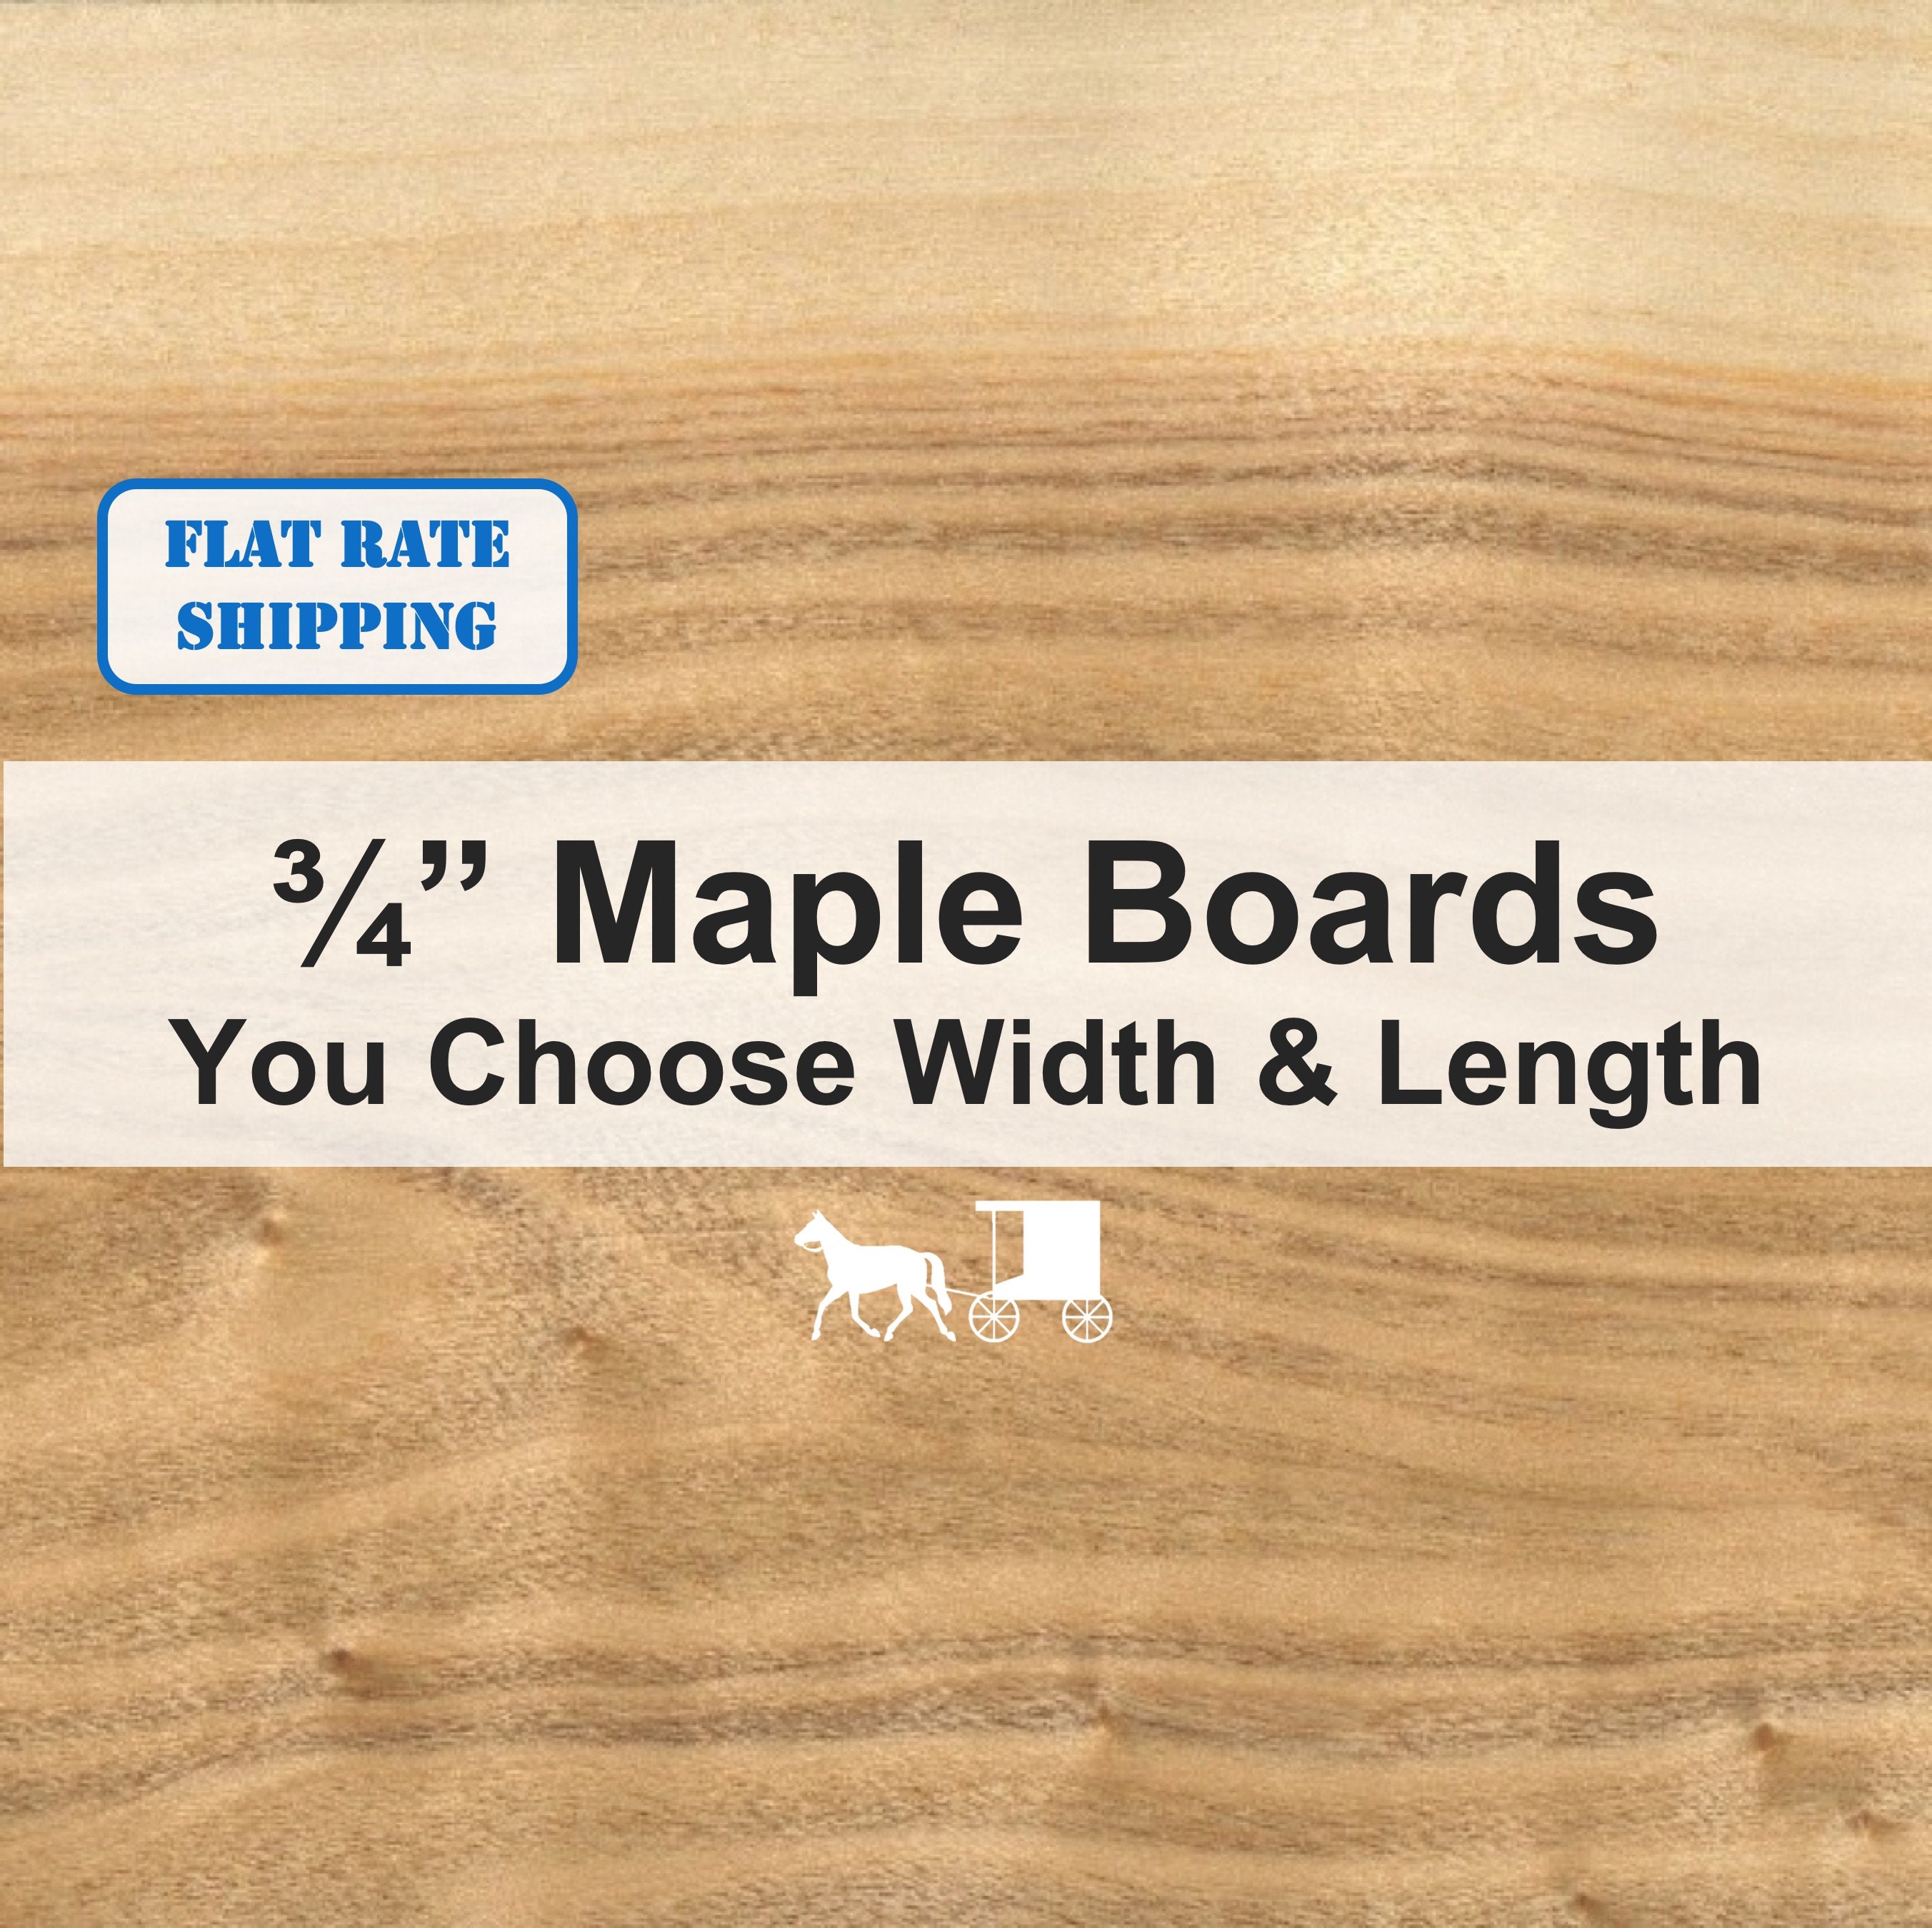 Hard Wood Boards 